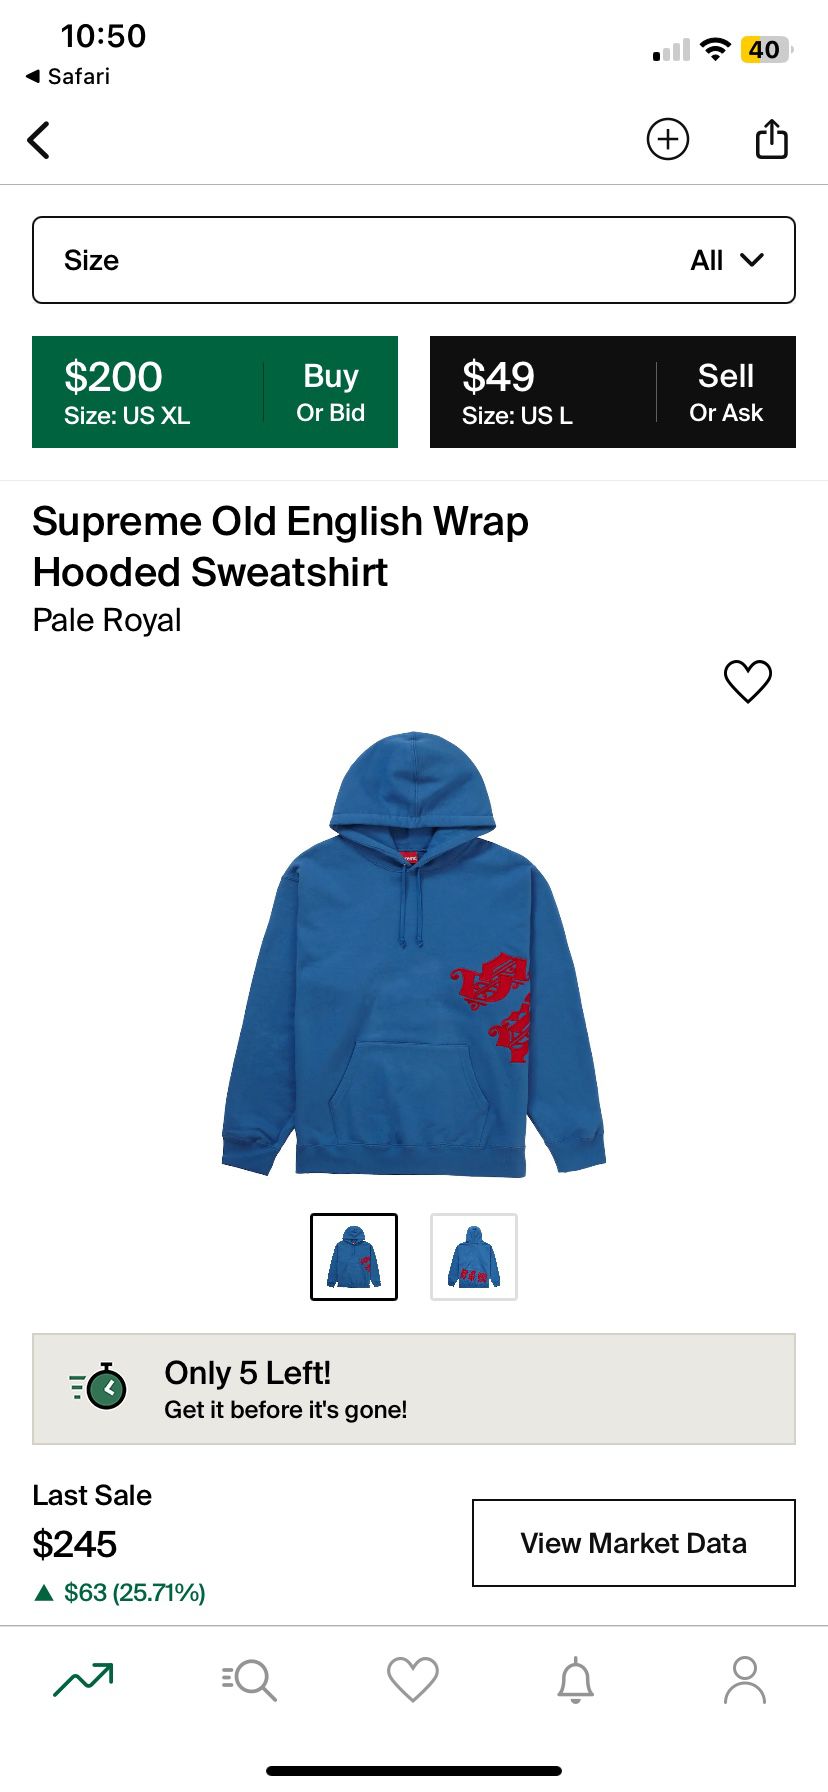 Supreme Old English Wrap Hoodie